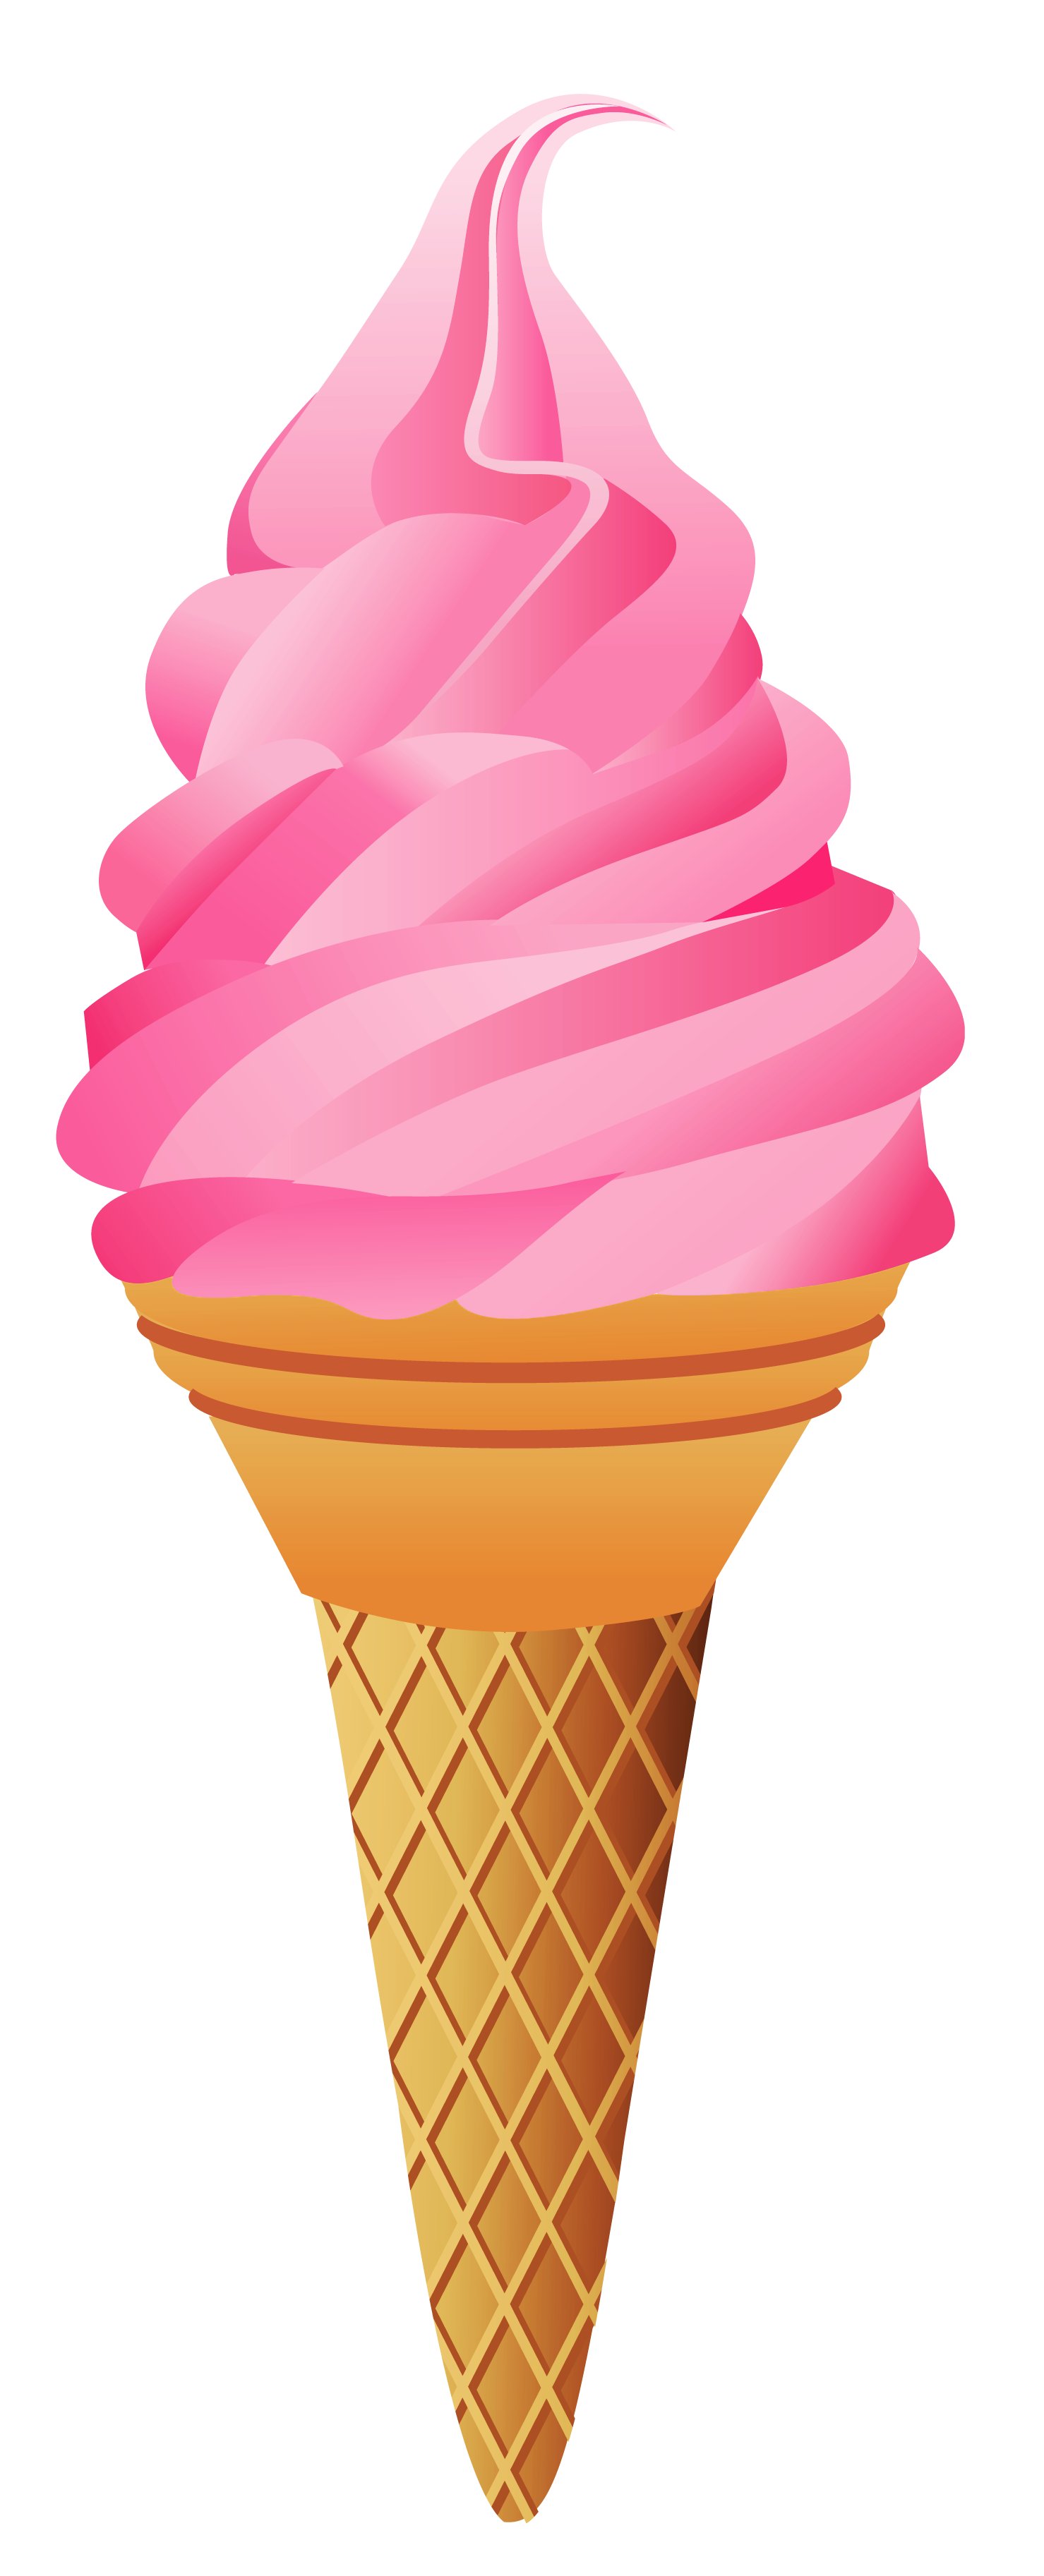 Ice cream cone ice cream no c - Clip Art Ice Cream Cone